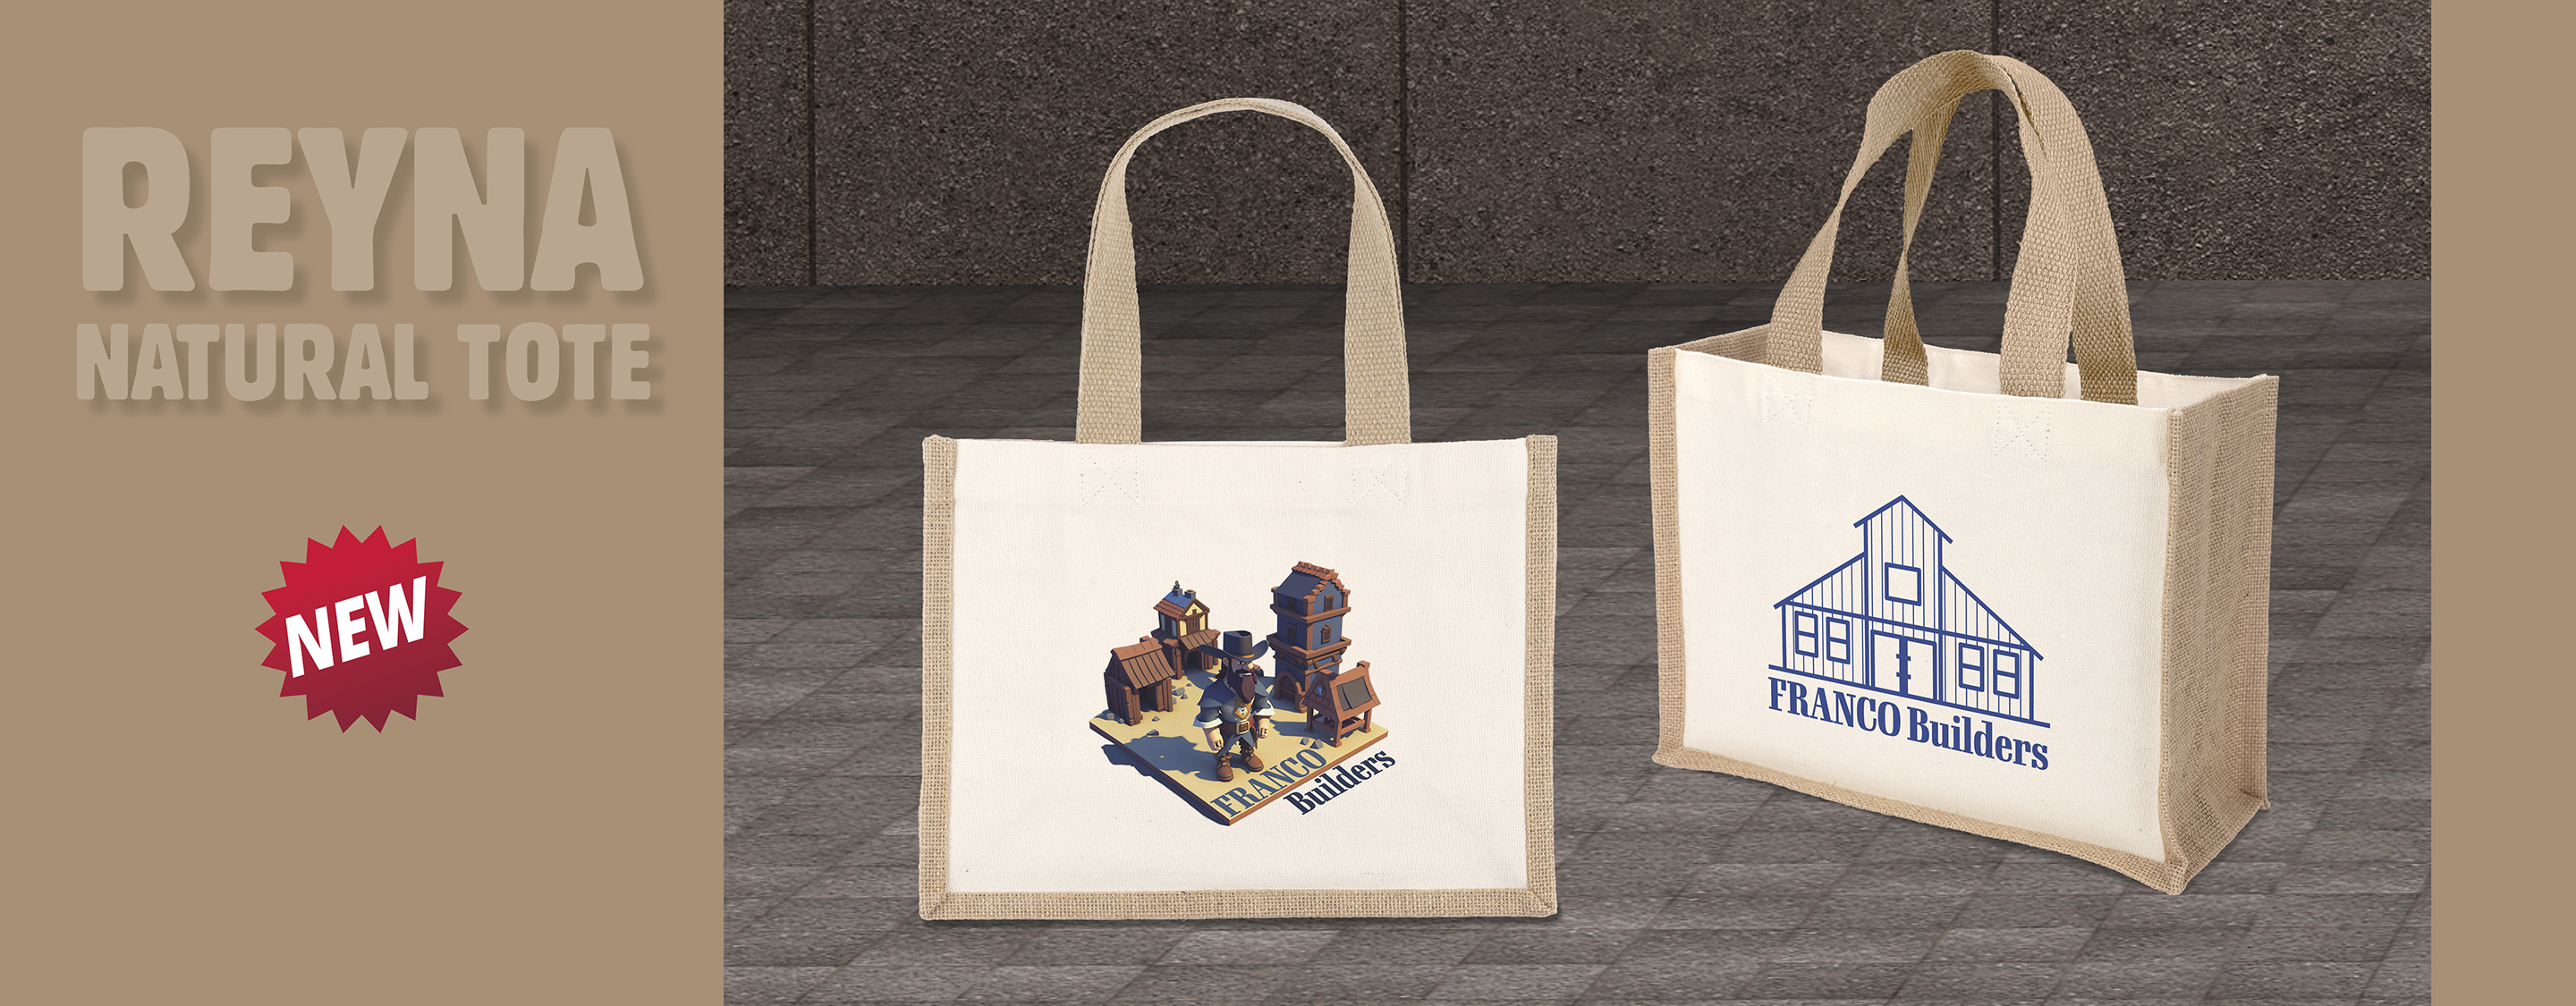 Custom Printed Paper Bags, Gift Bags, Shopping Bags - Canva